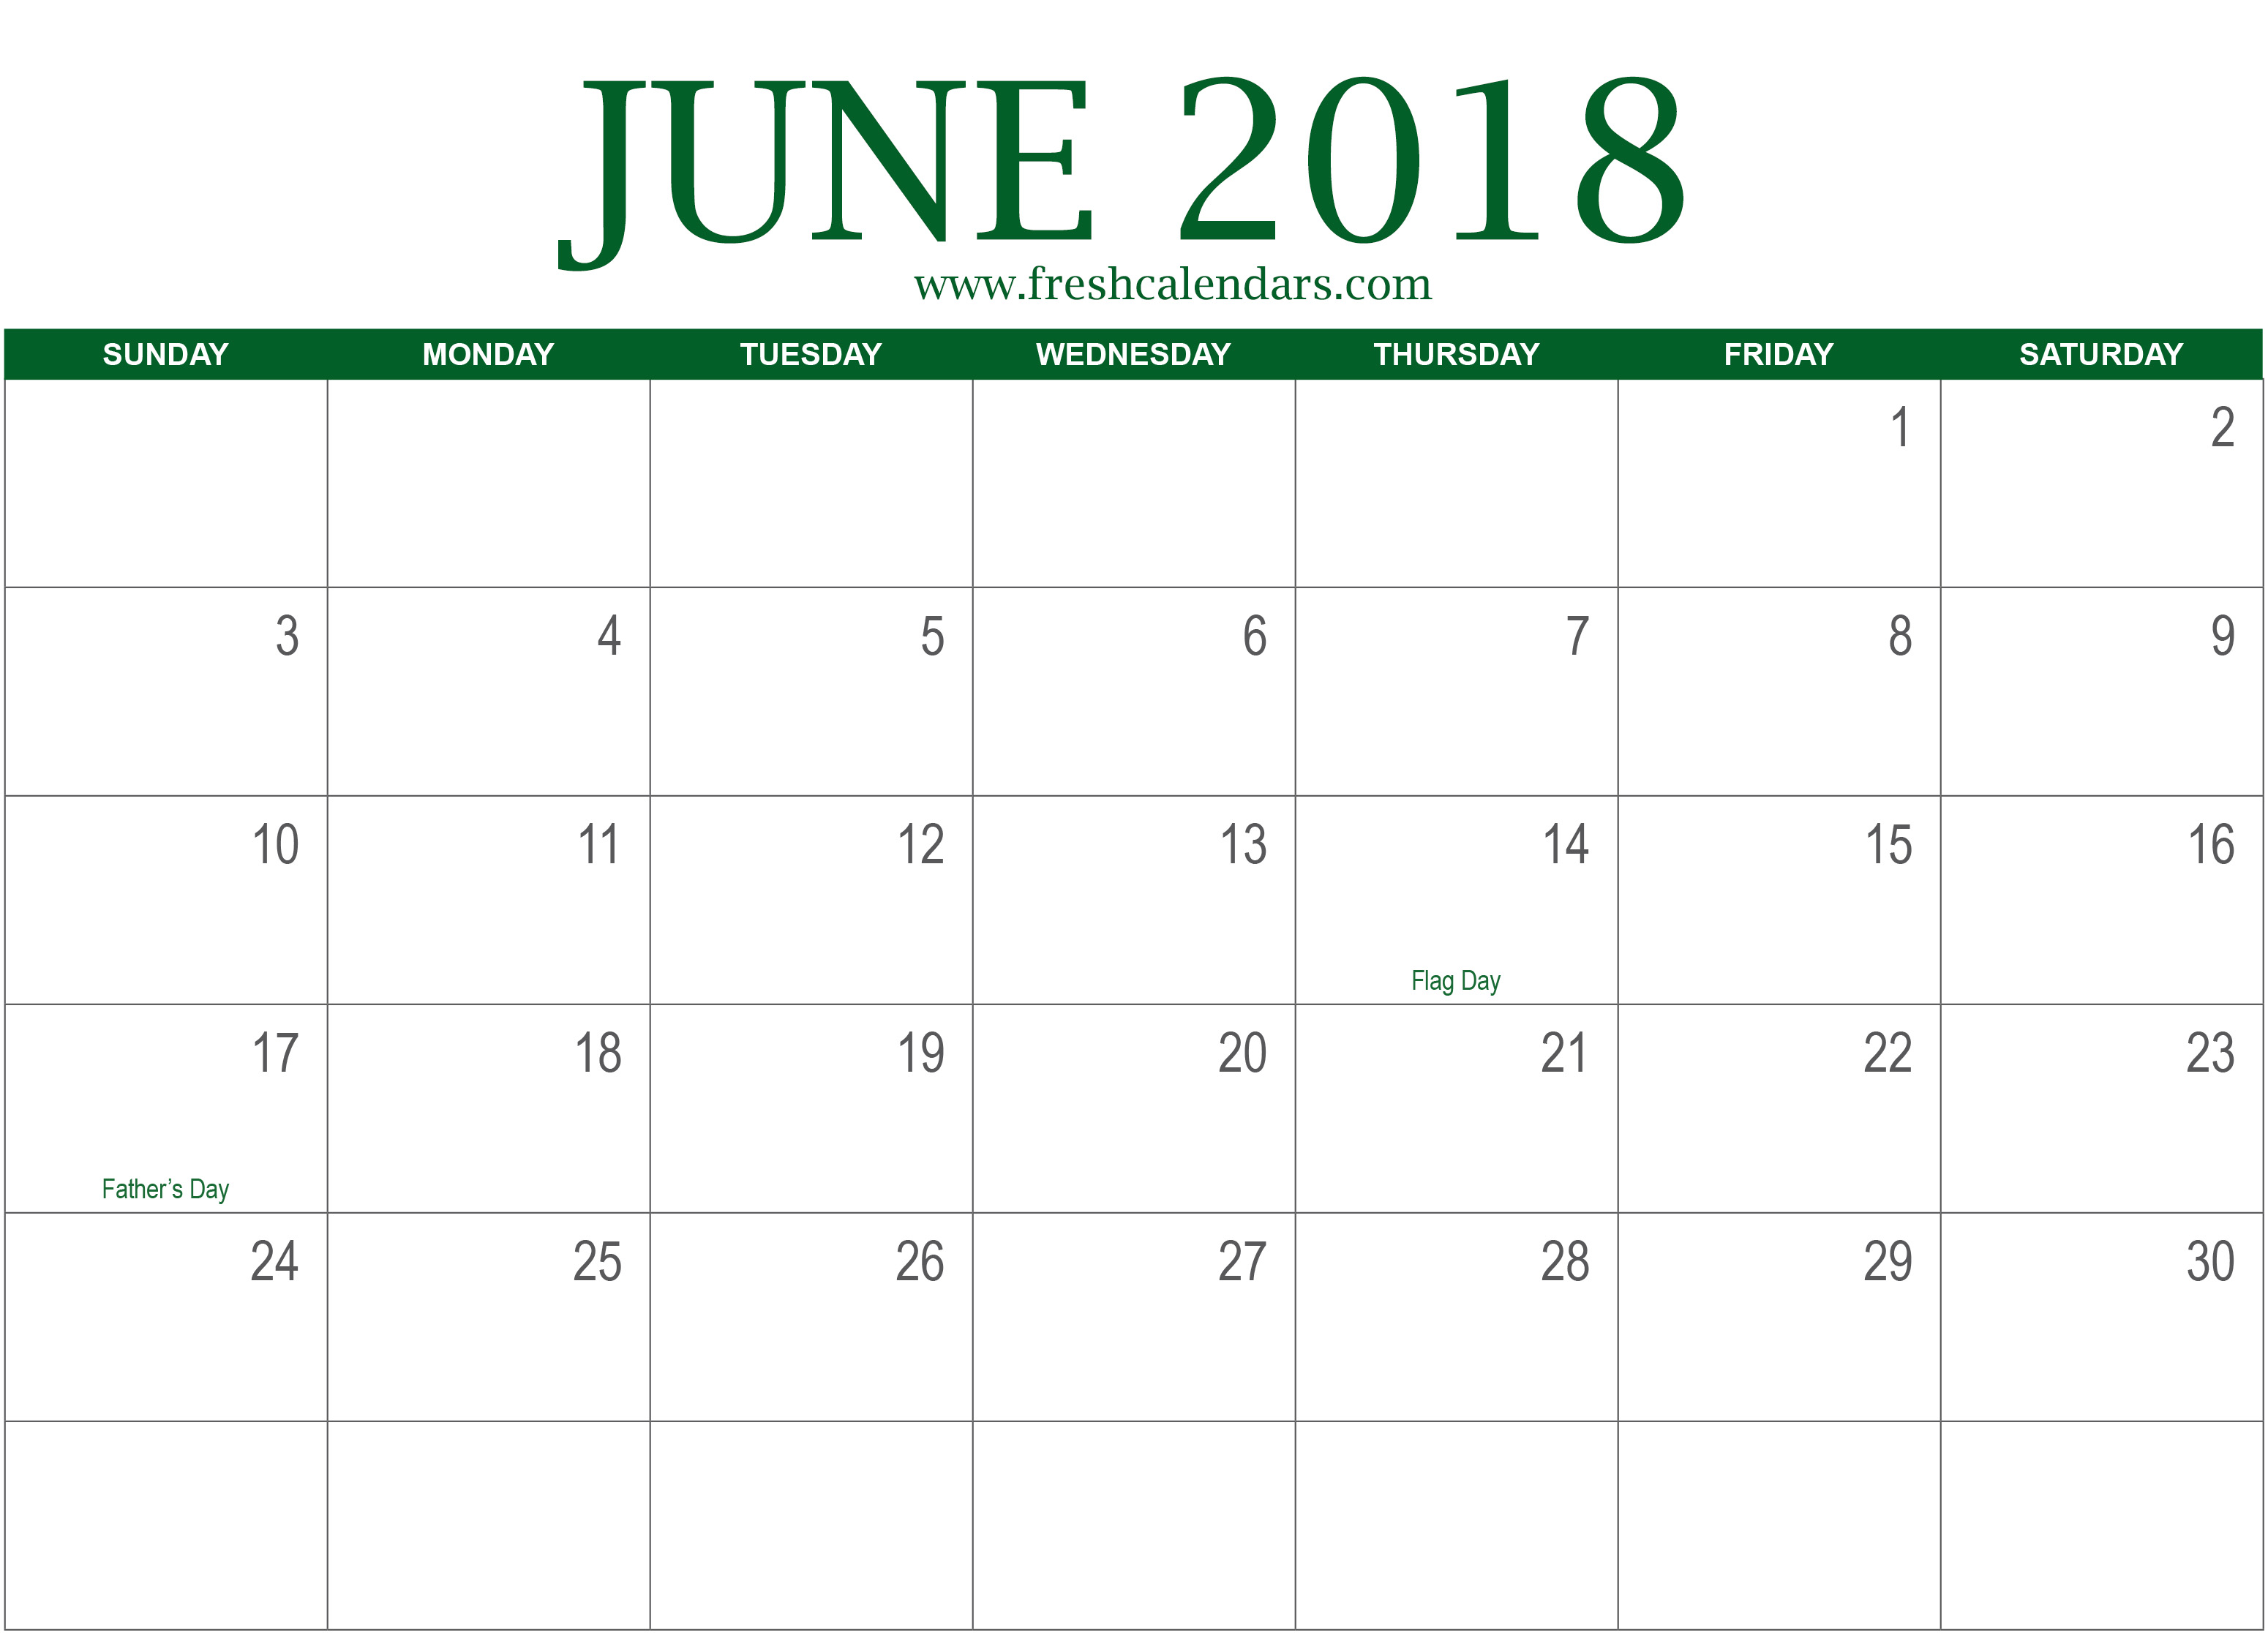 June 2018 Calendar With Holidays